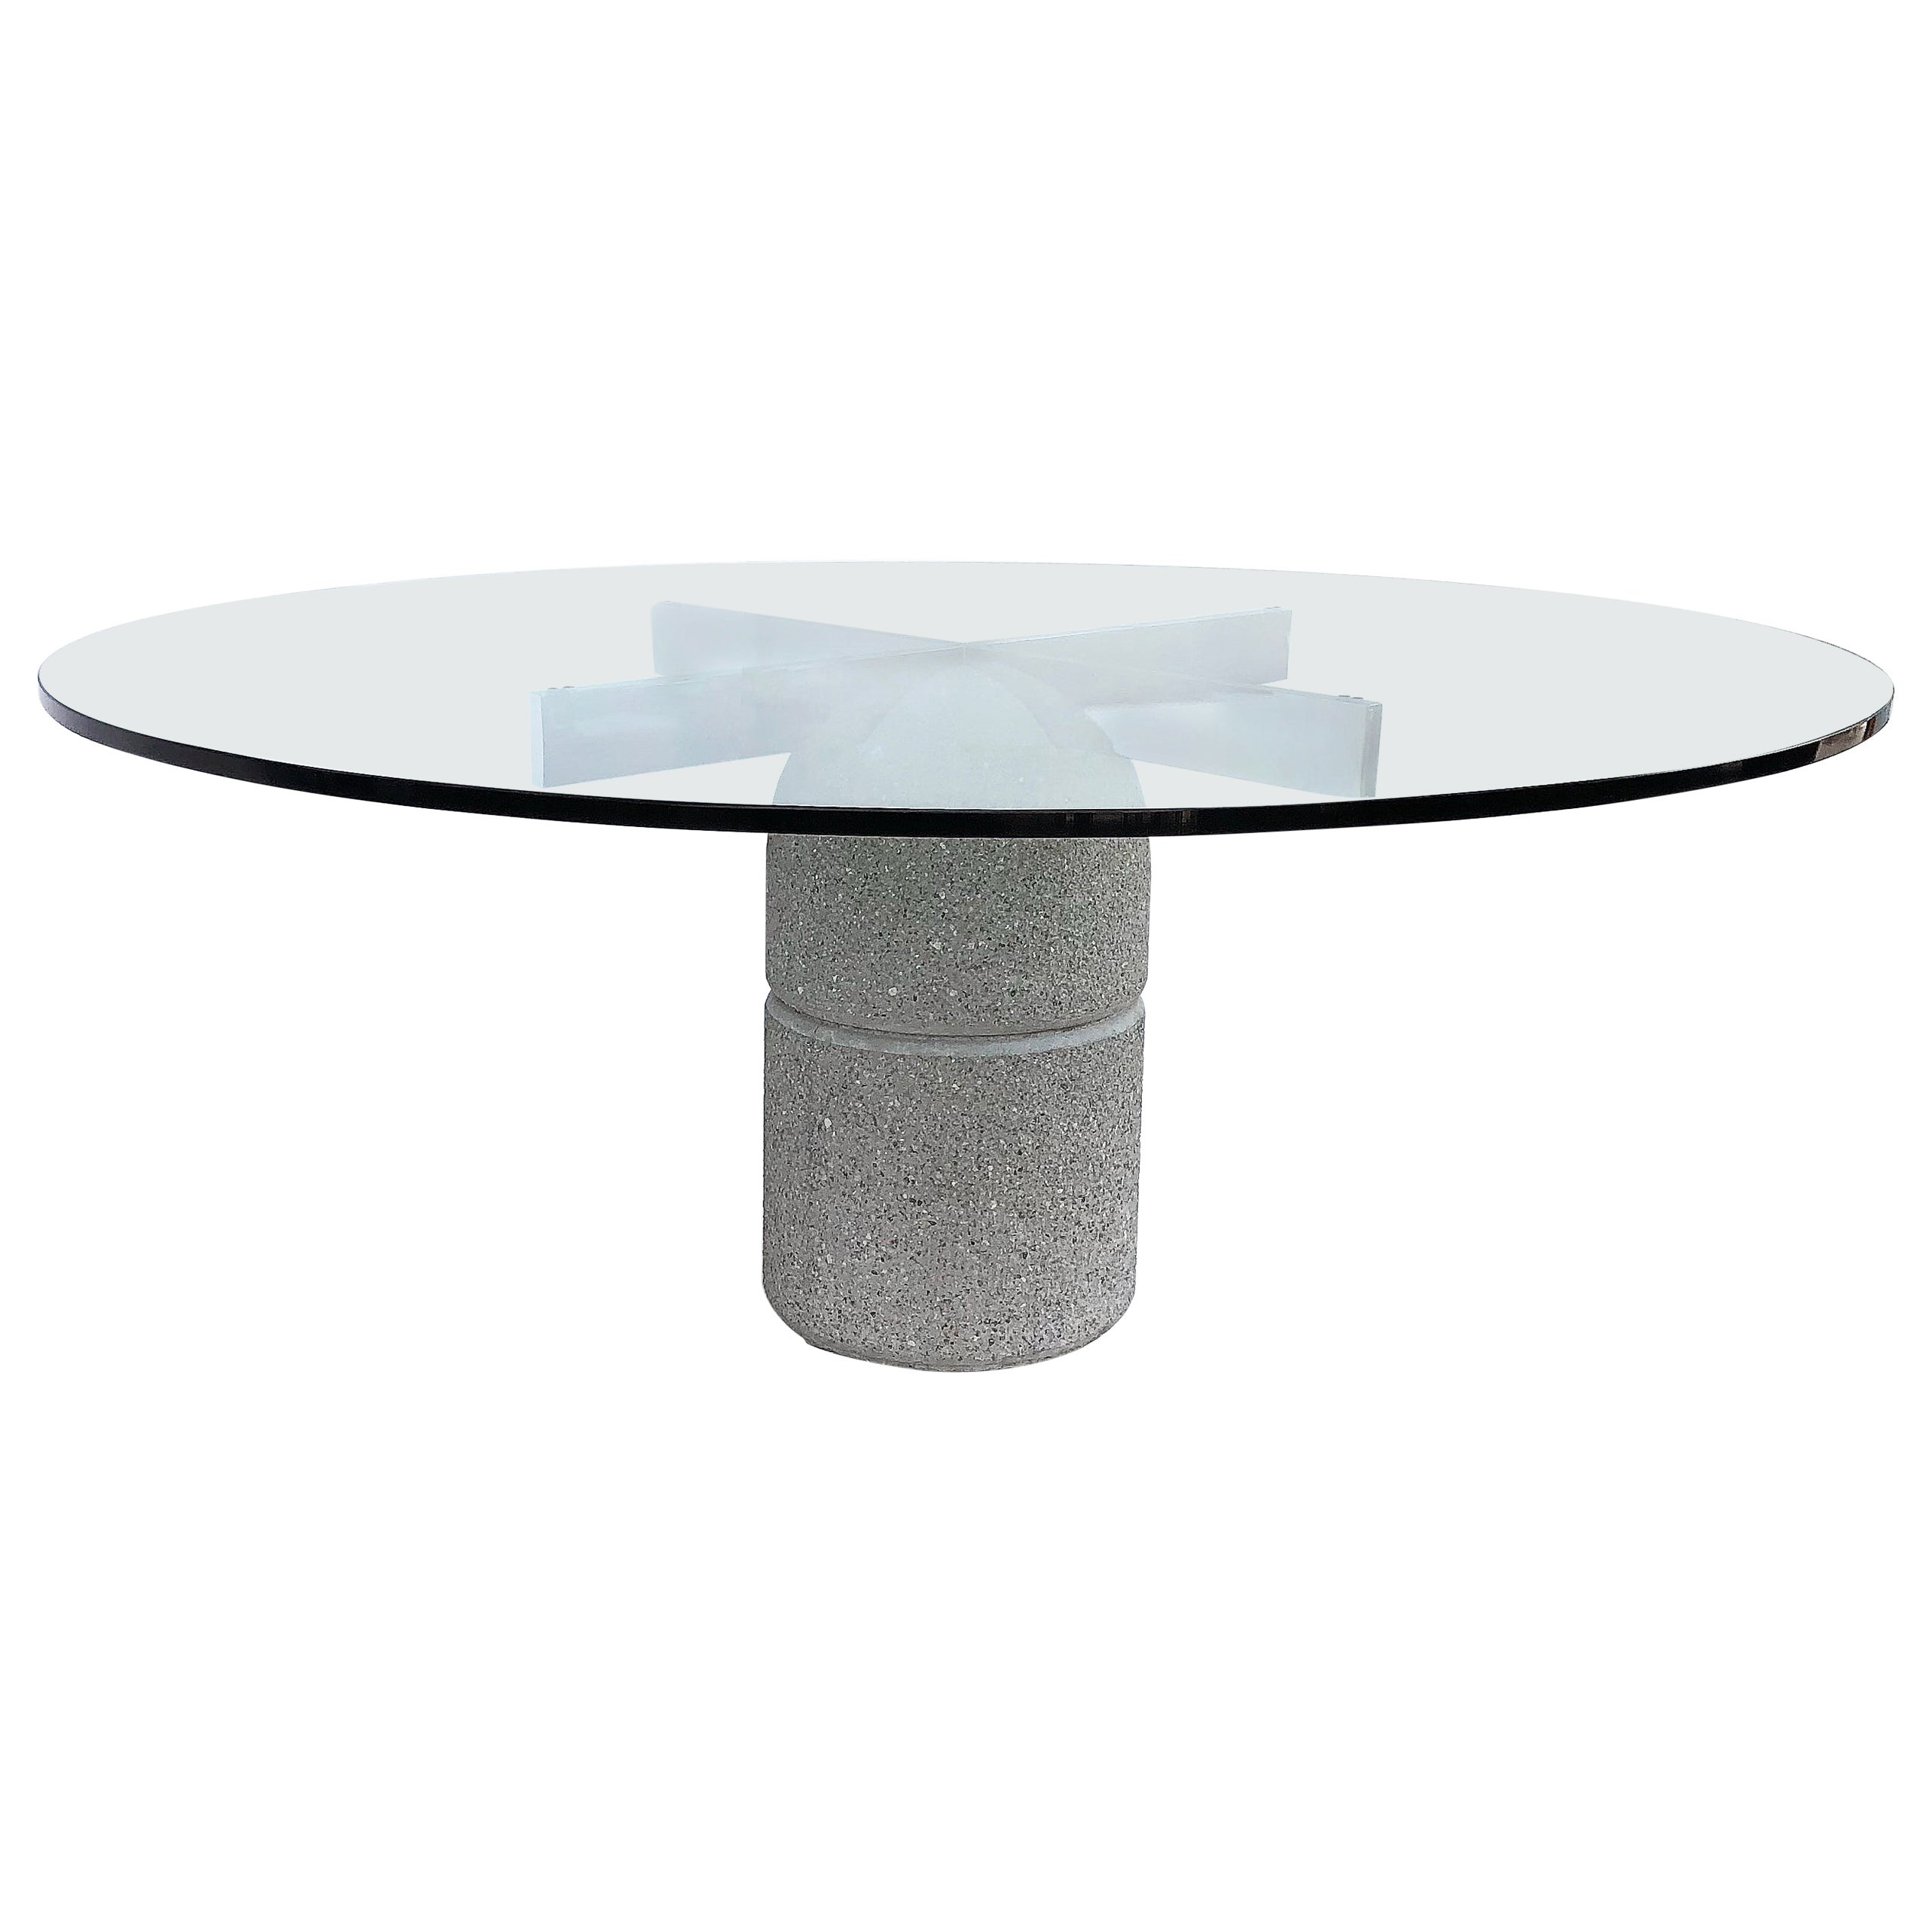 Saporiti Italia Concrete, Chrome, Glass Dining Table